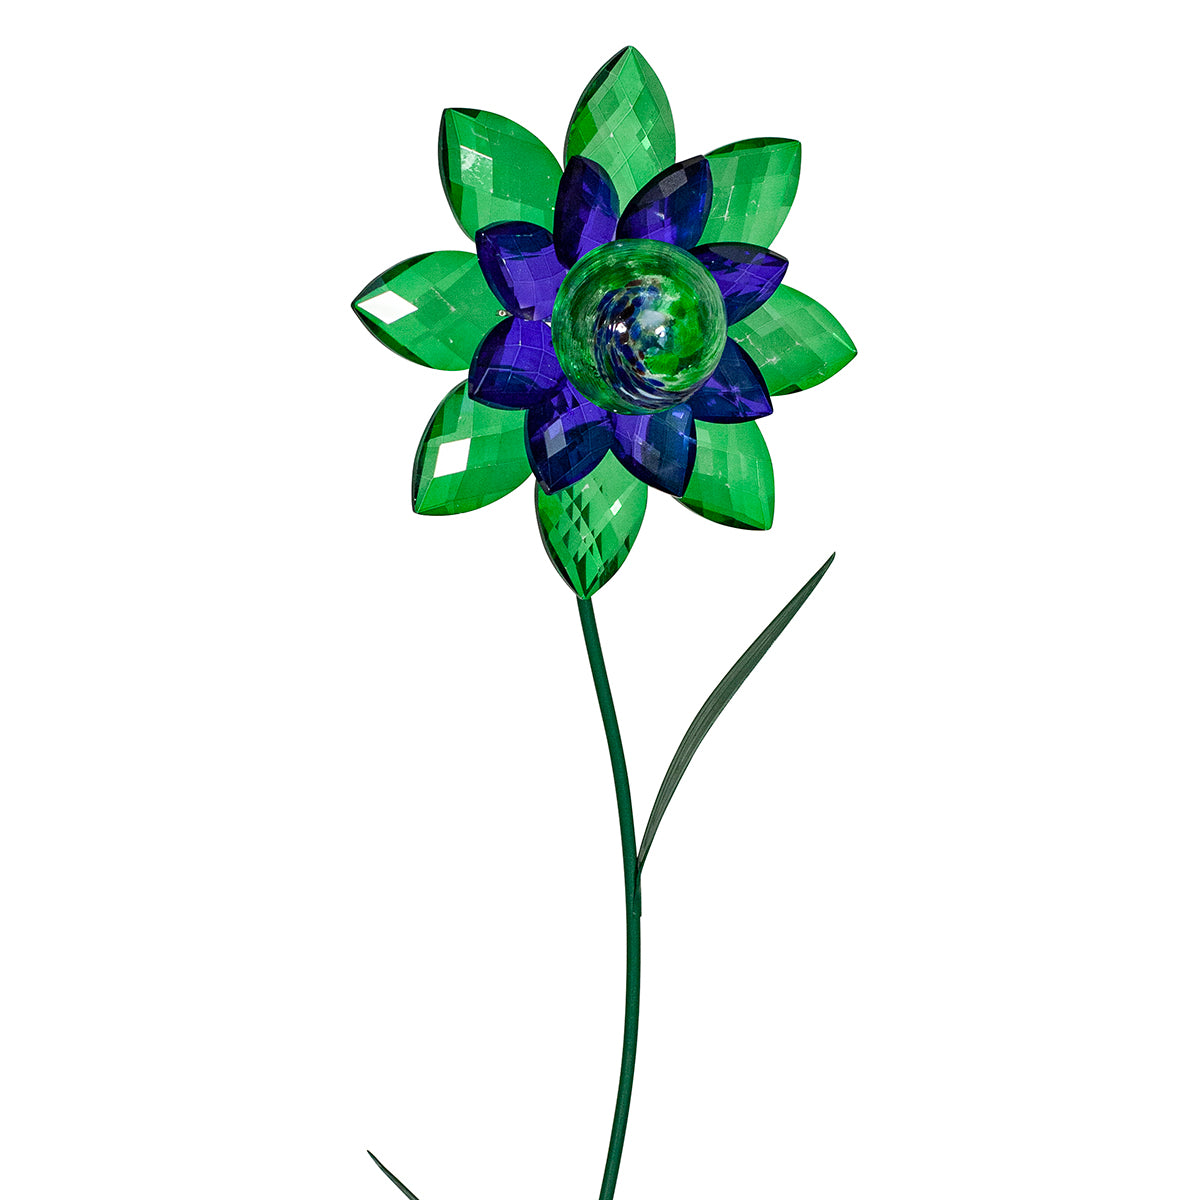 Illuminarie Gem Flower Stake - Green/Blue